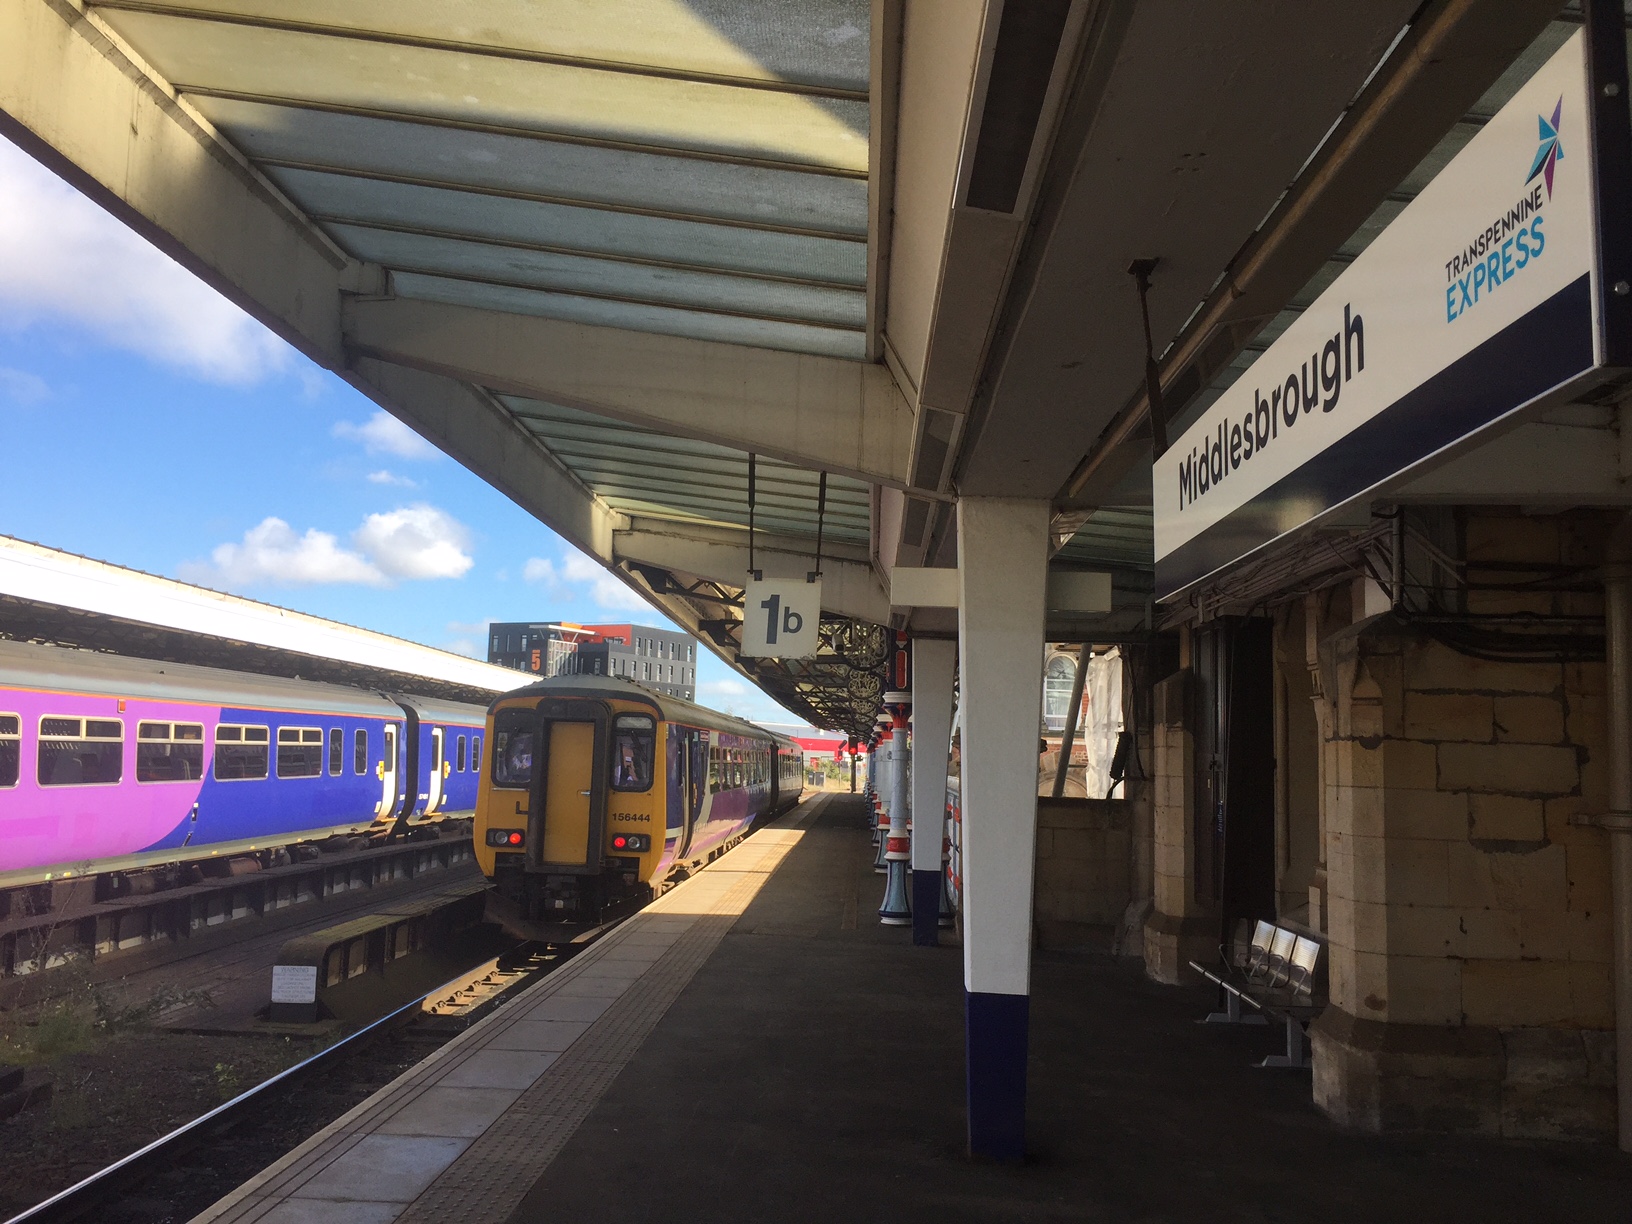 Middlesbrough Railway Station.